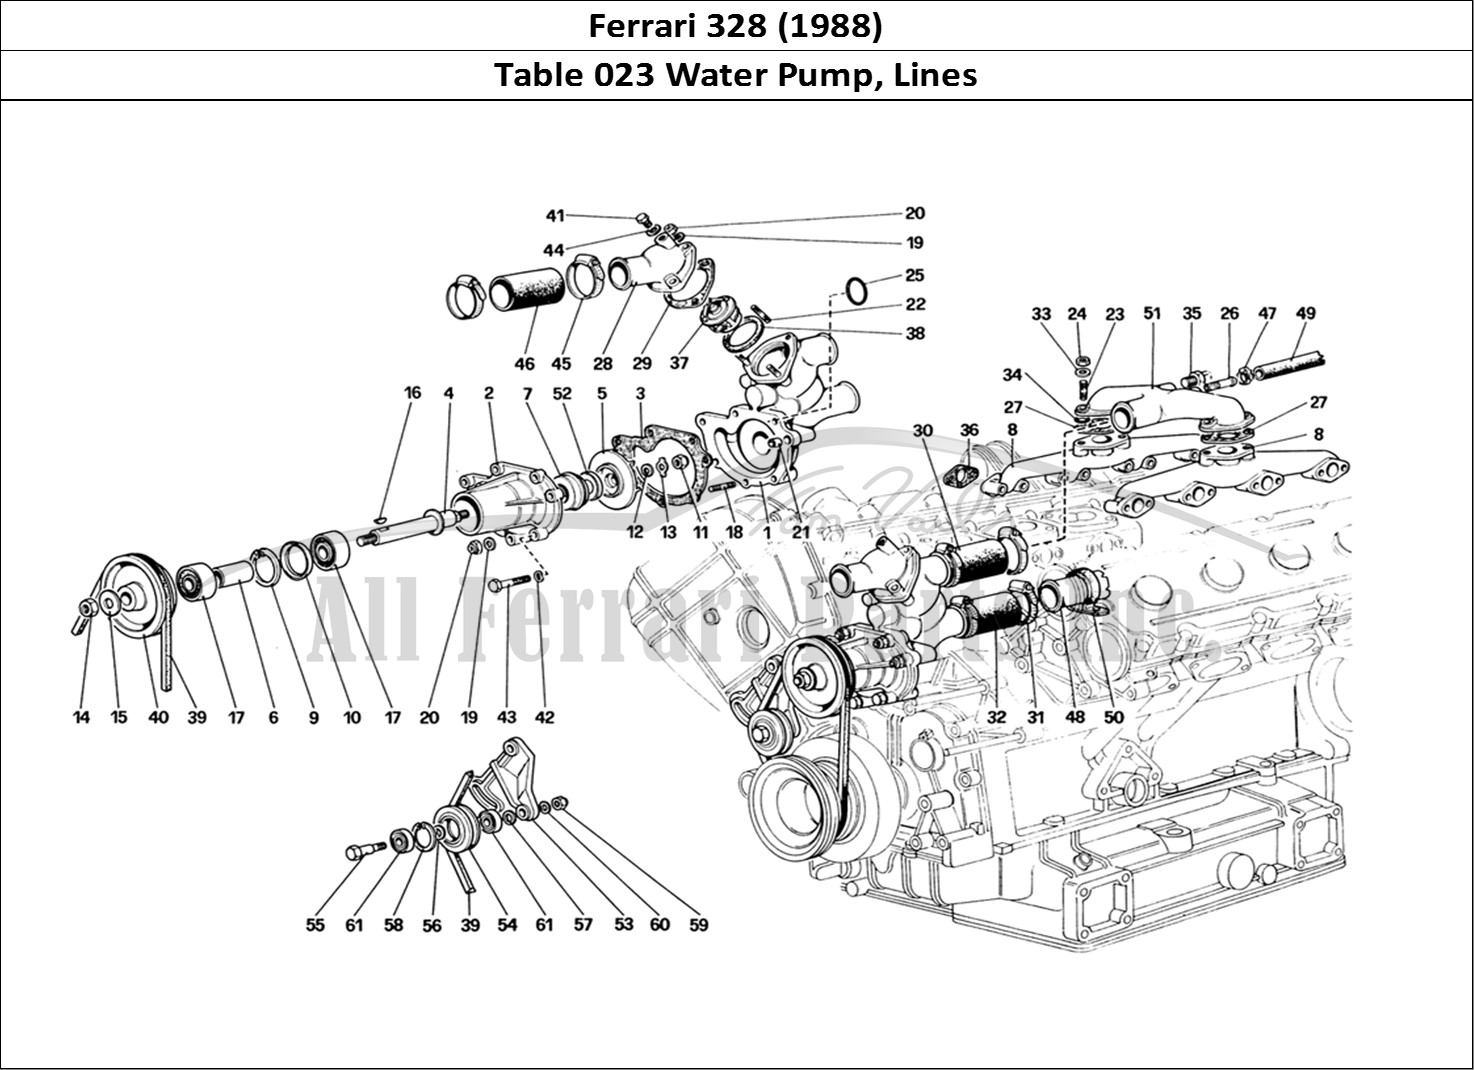 Ferrari Parts Ferrari 328 (1988) Page 023 Water Pump and Pipings